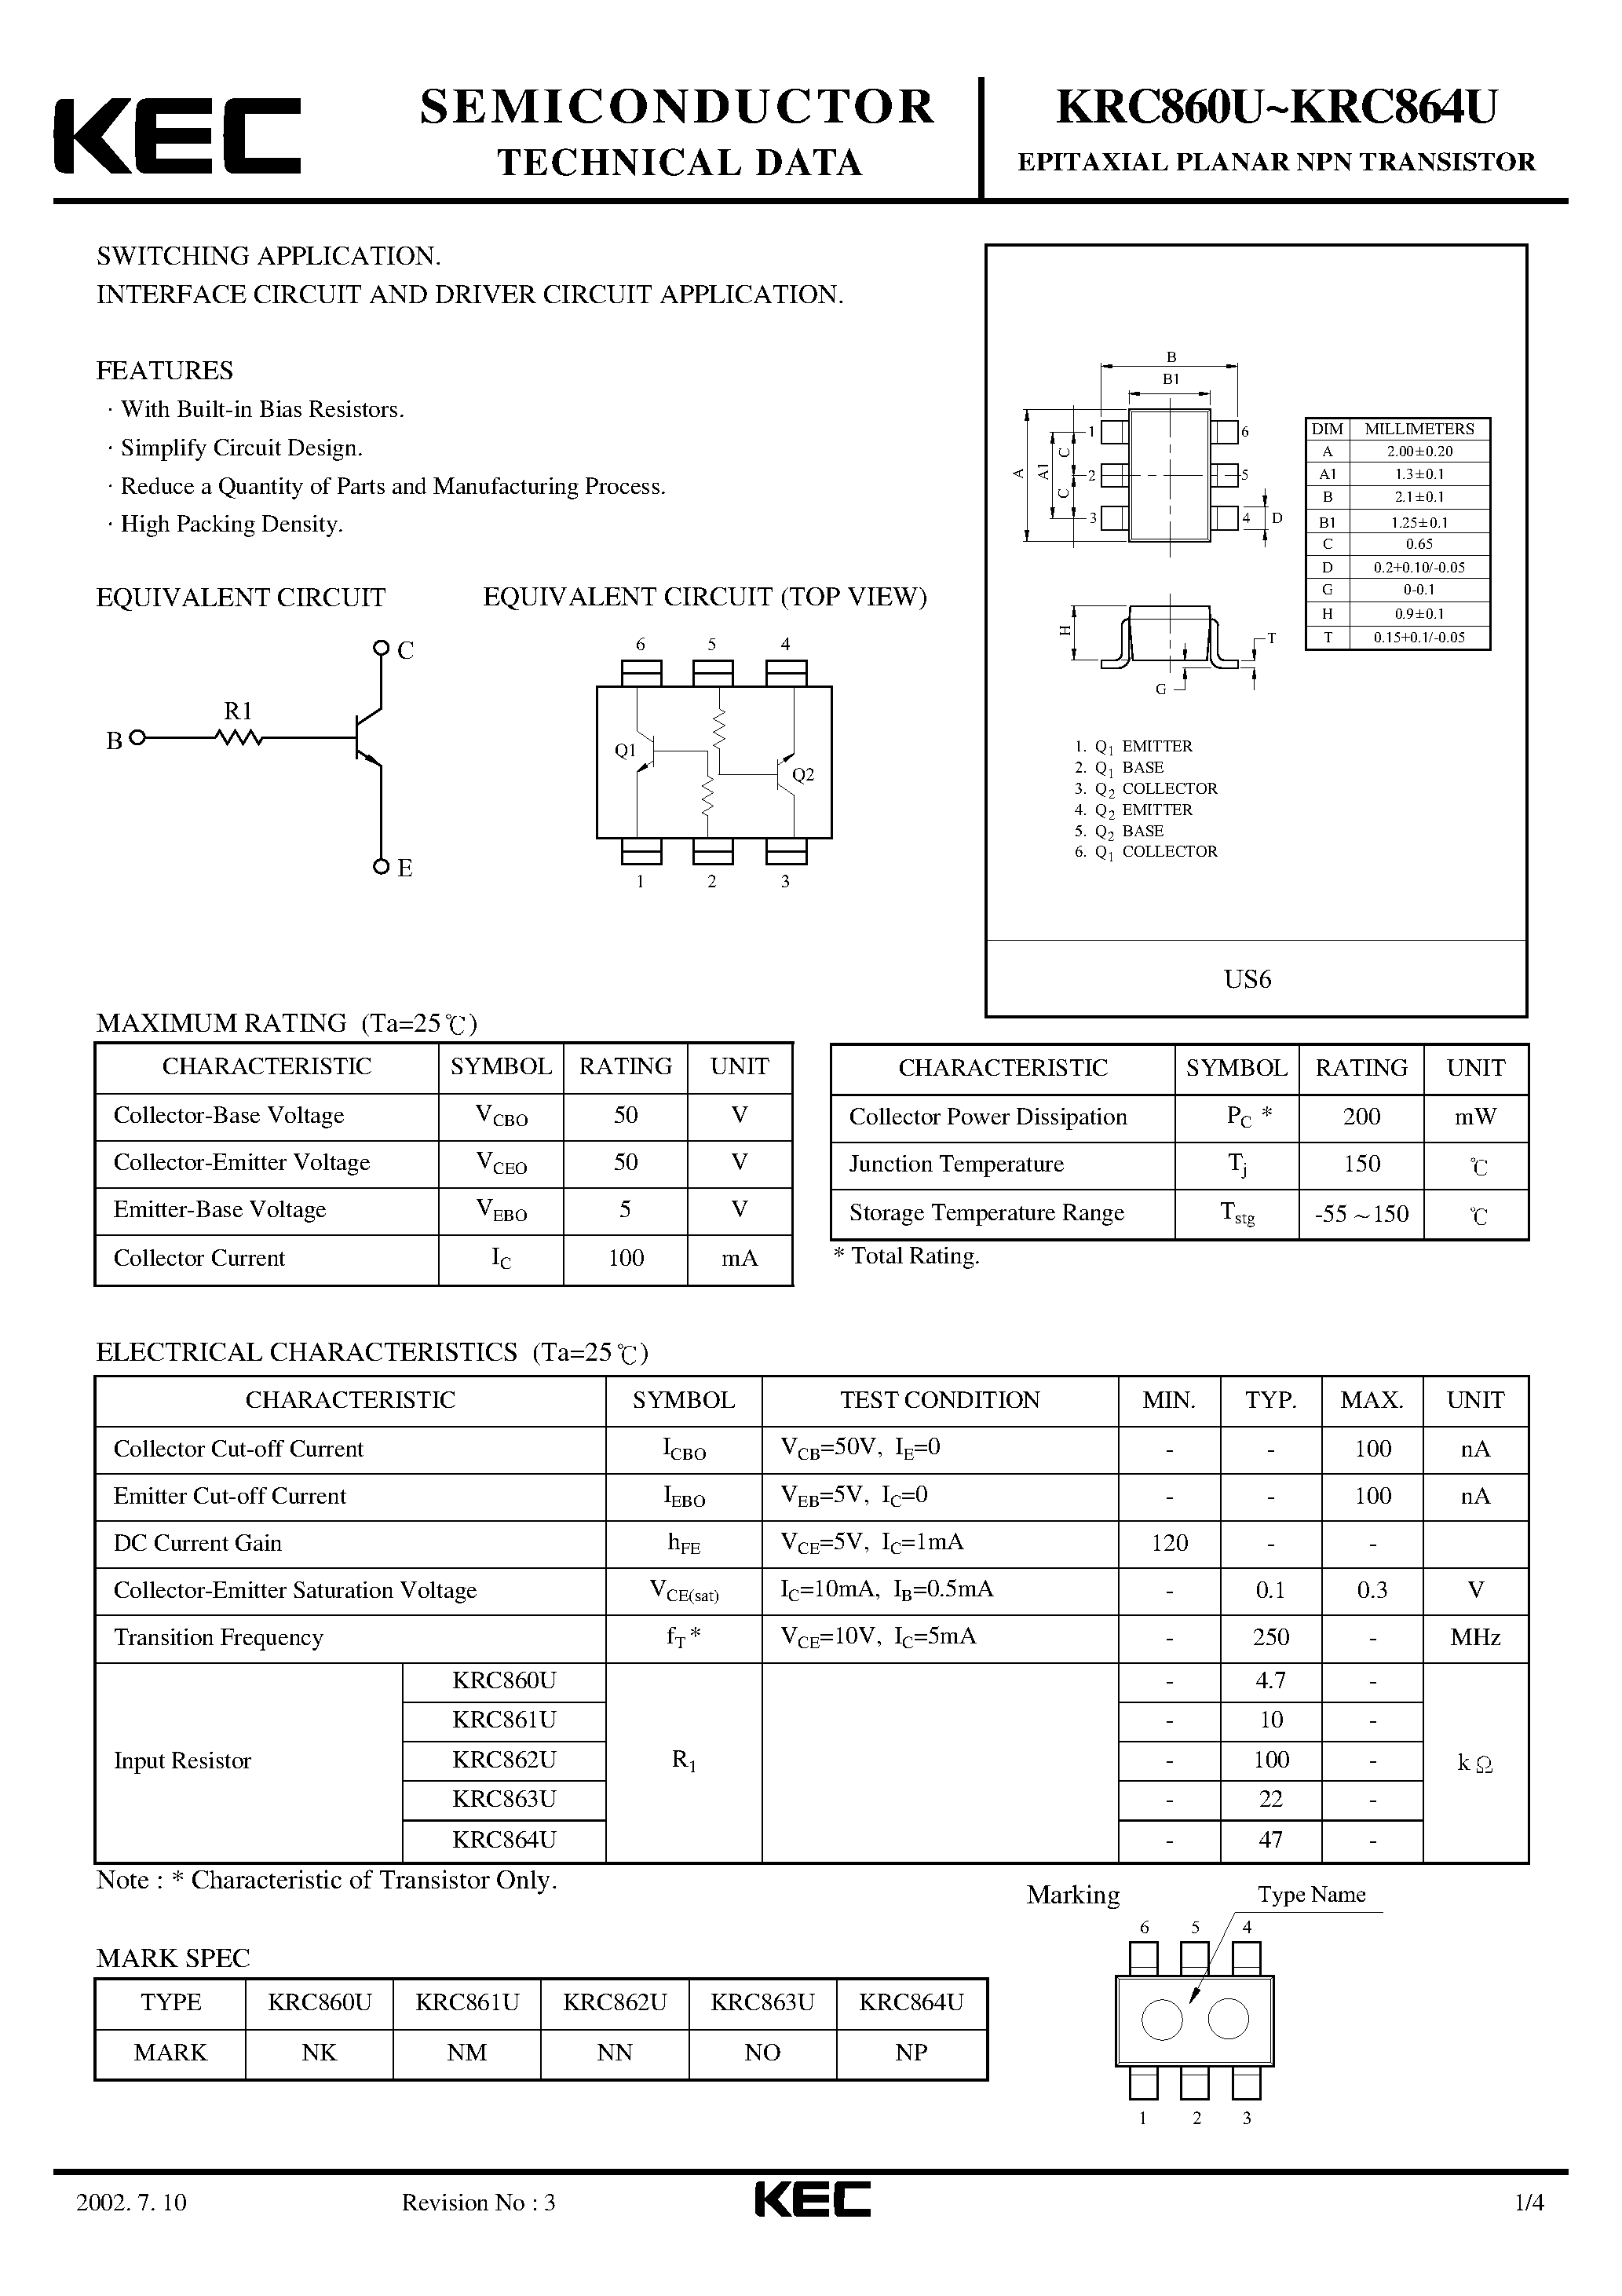 Datasheet KRC860U - (KRC860U - KRC864U) EPITAXIAL PLANAR NPN TRANSISTOR page 1